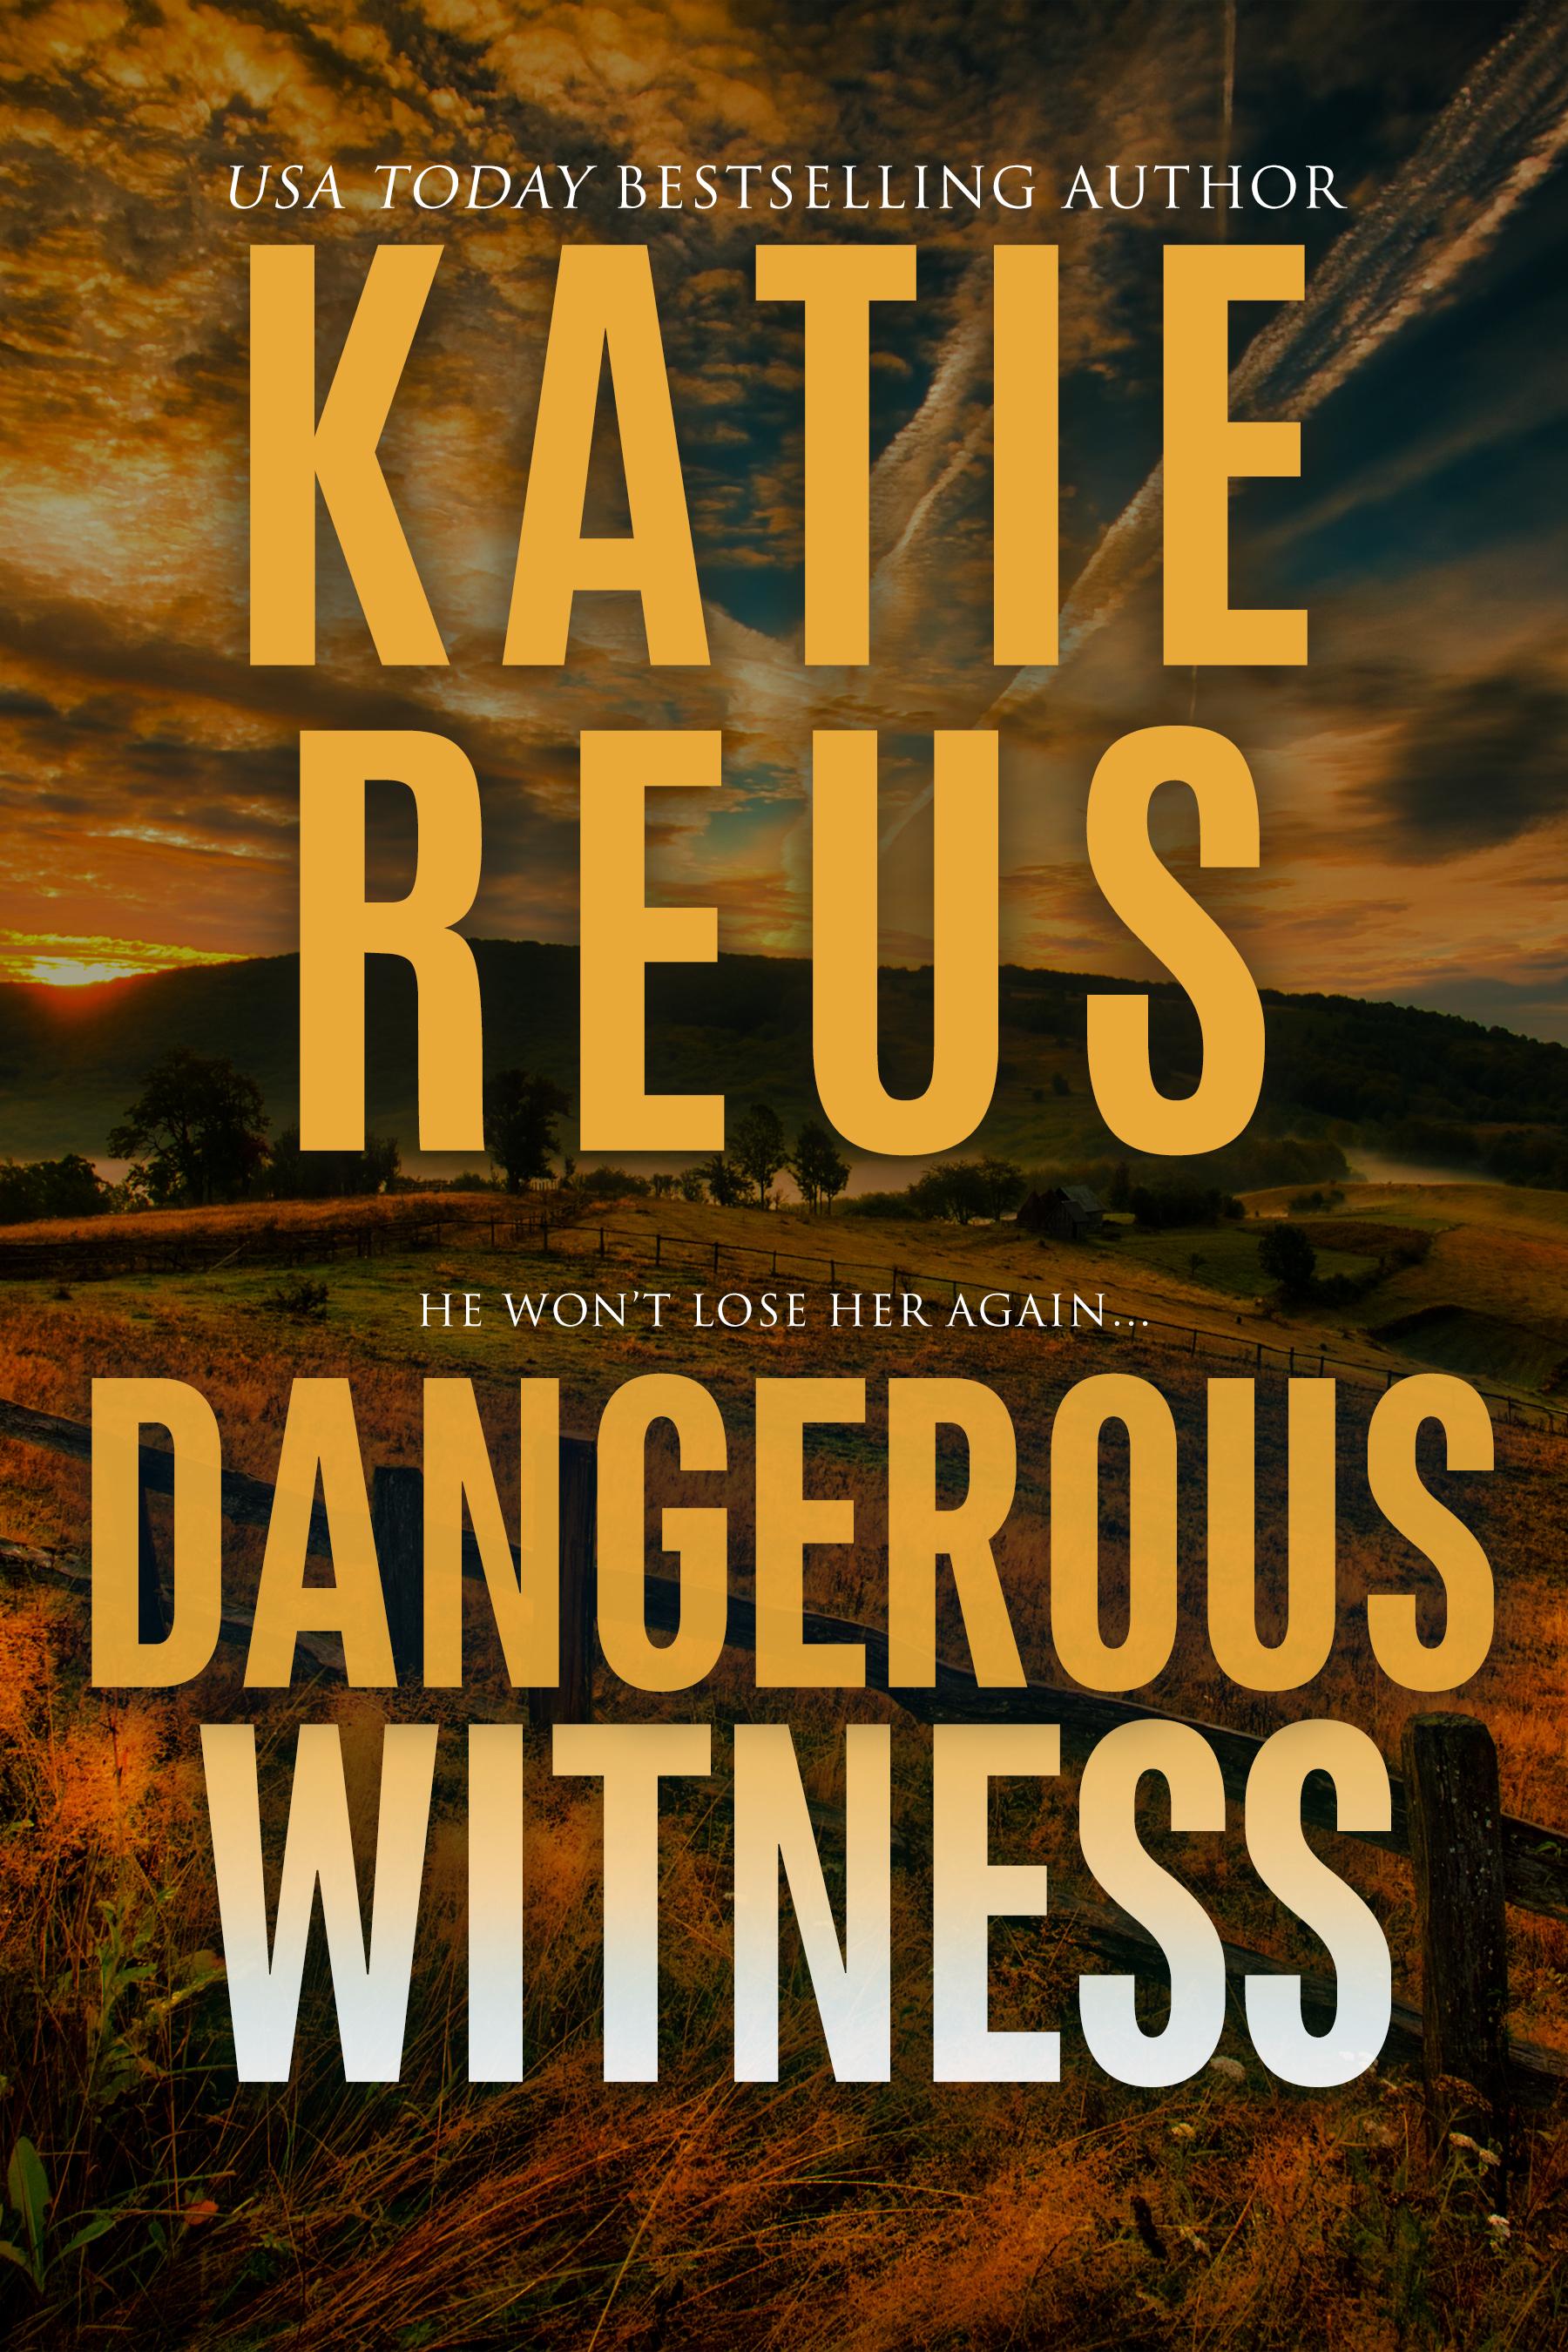 Dangerous Witness